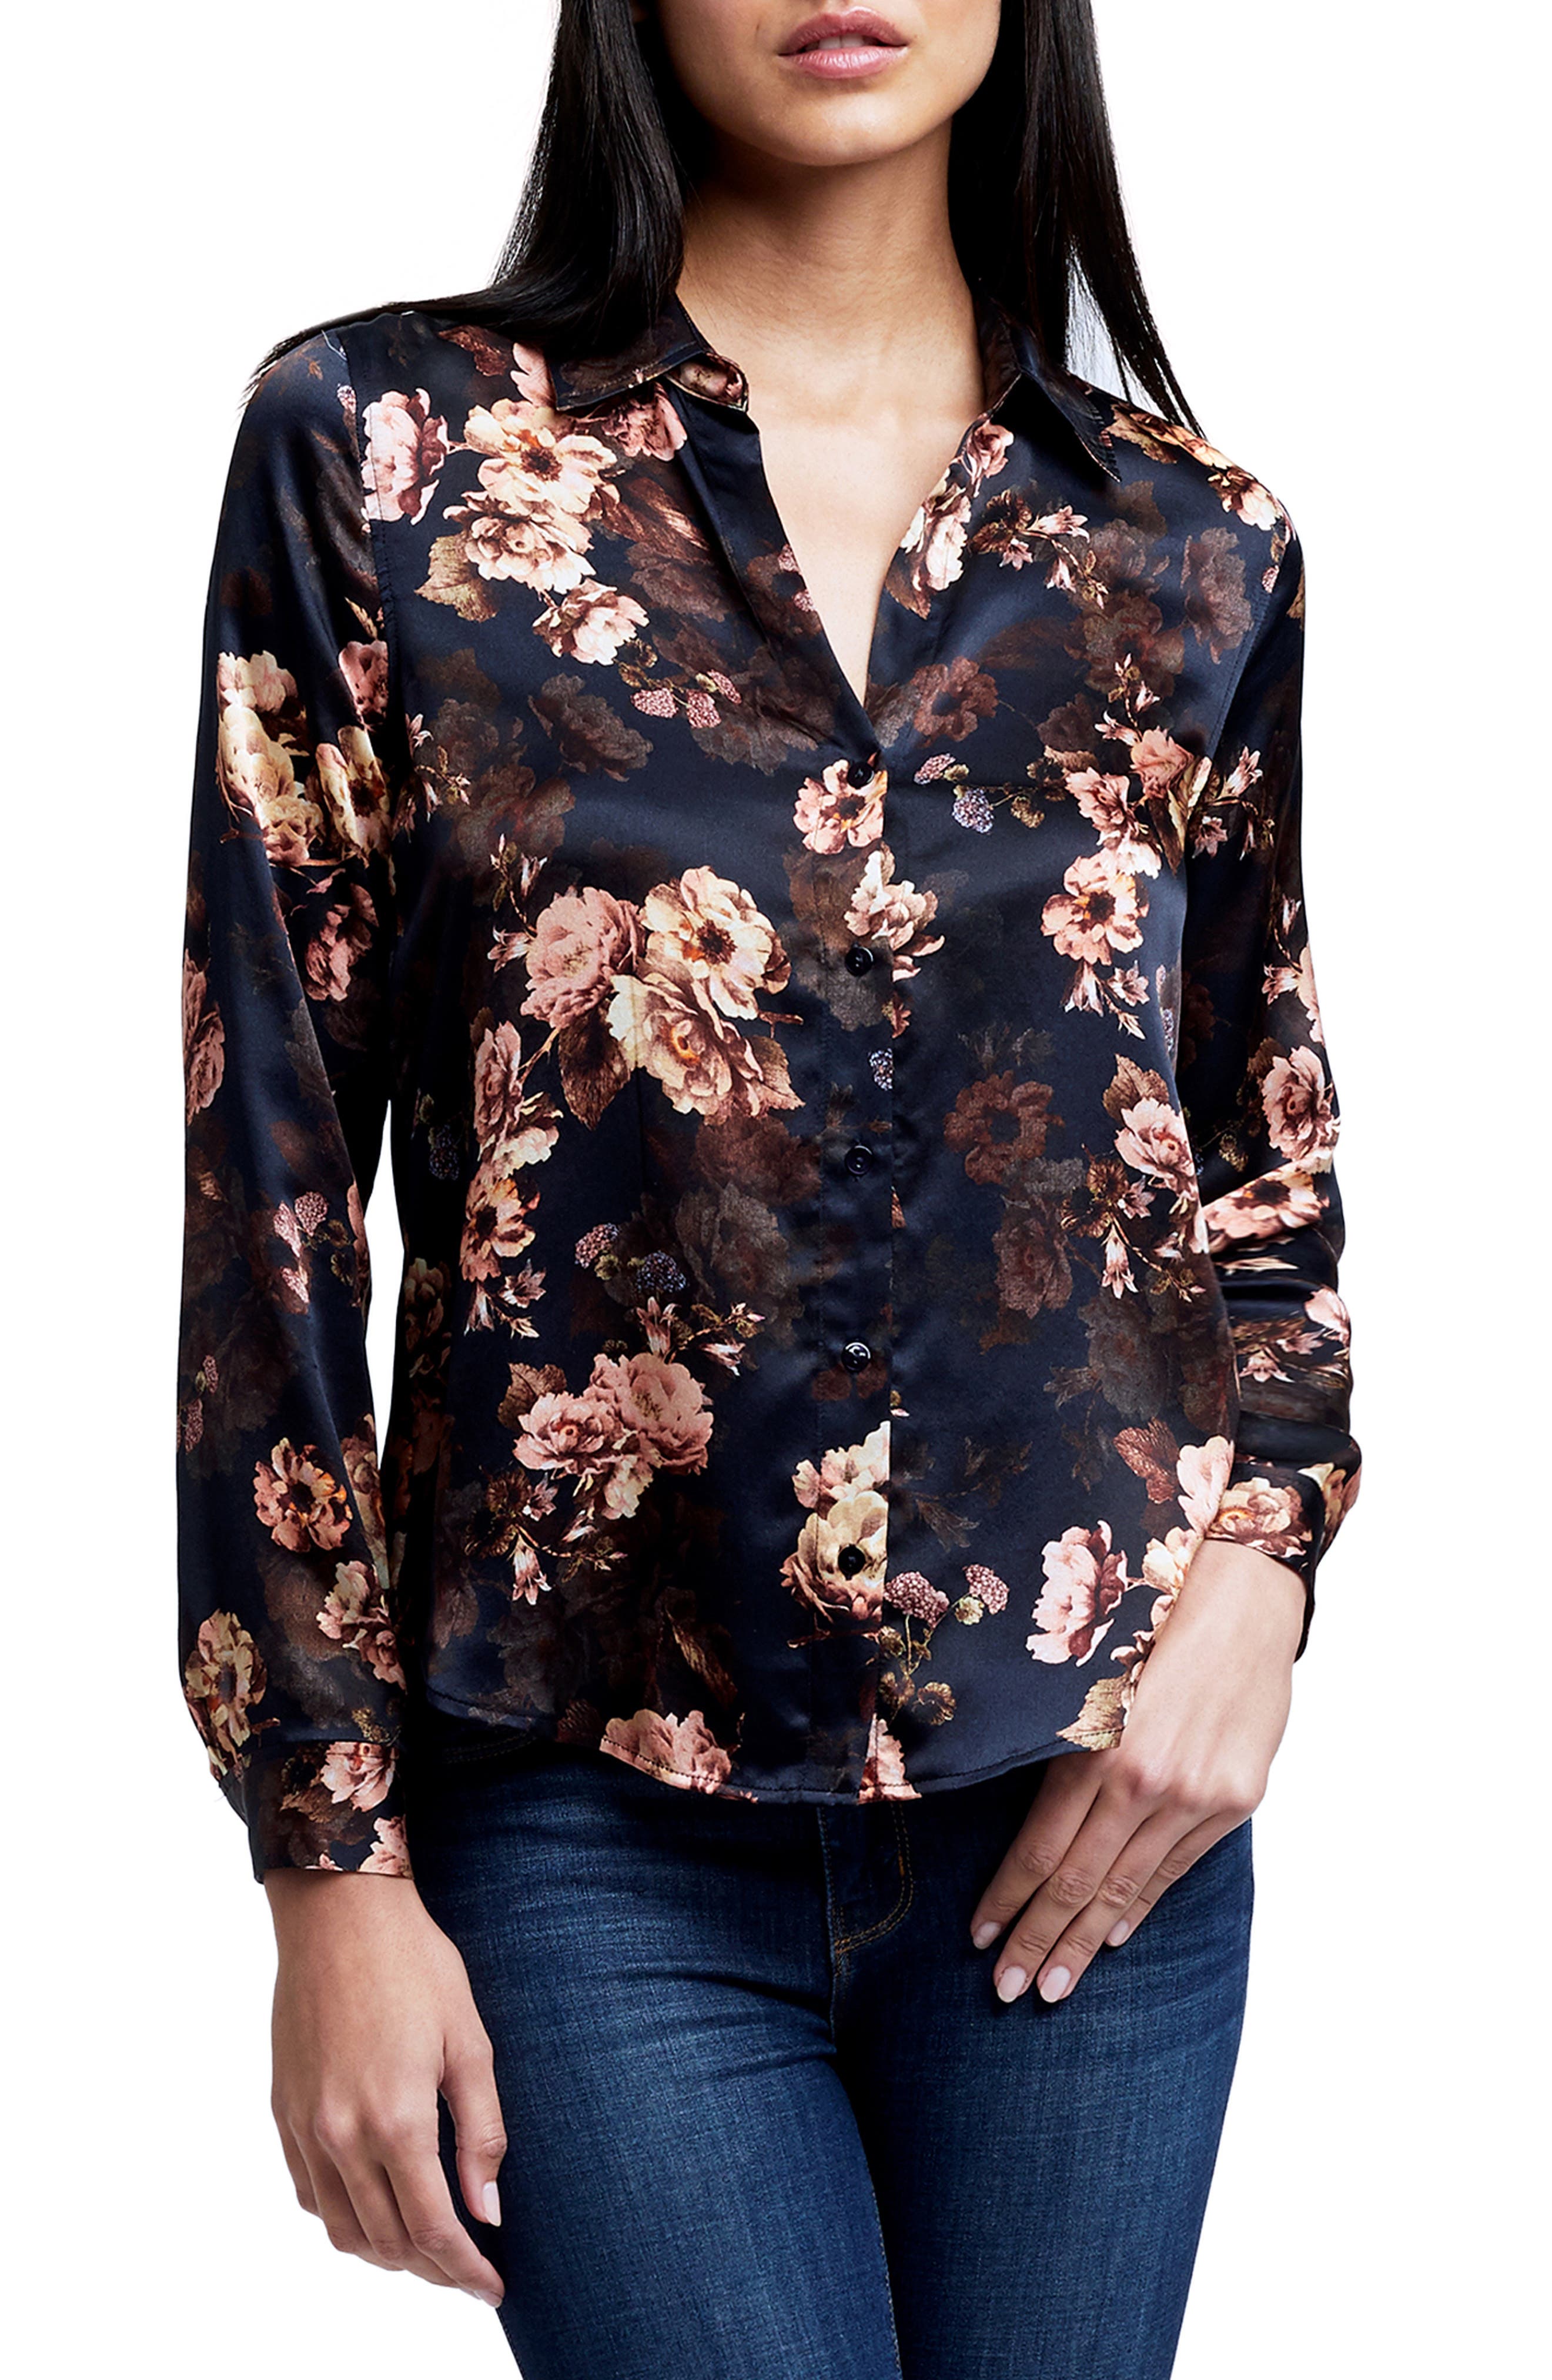 Tropical Floral Print Womens A-Line Chiffon Blouse Shirt Tops 